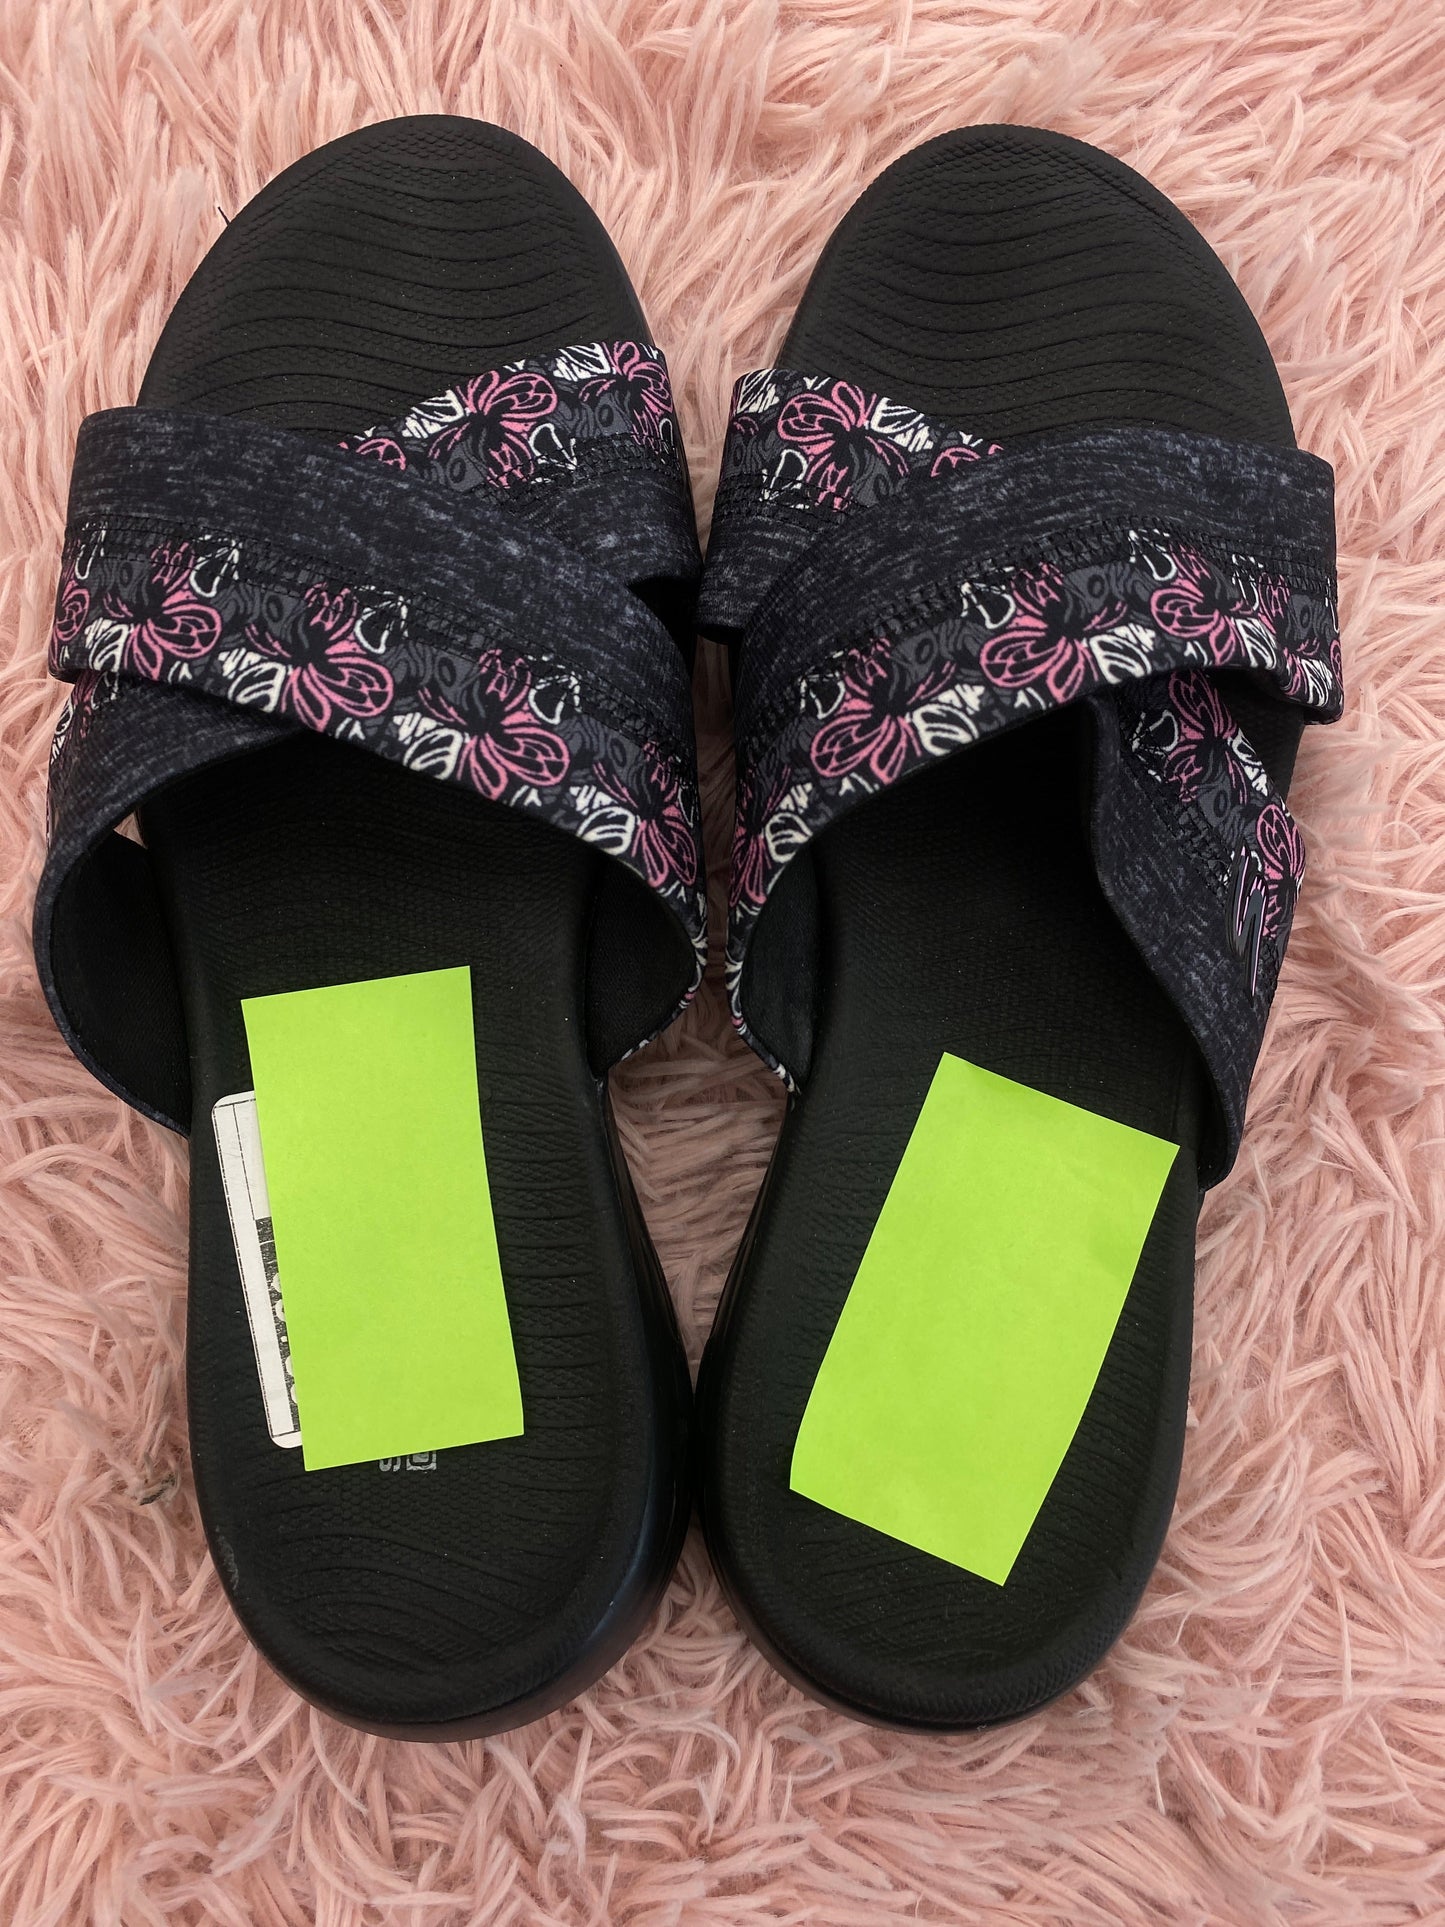 Pinkblack Sandals Flip Flops Skechers, Size 9